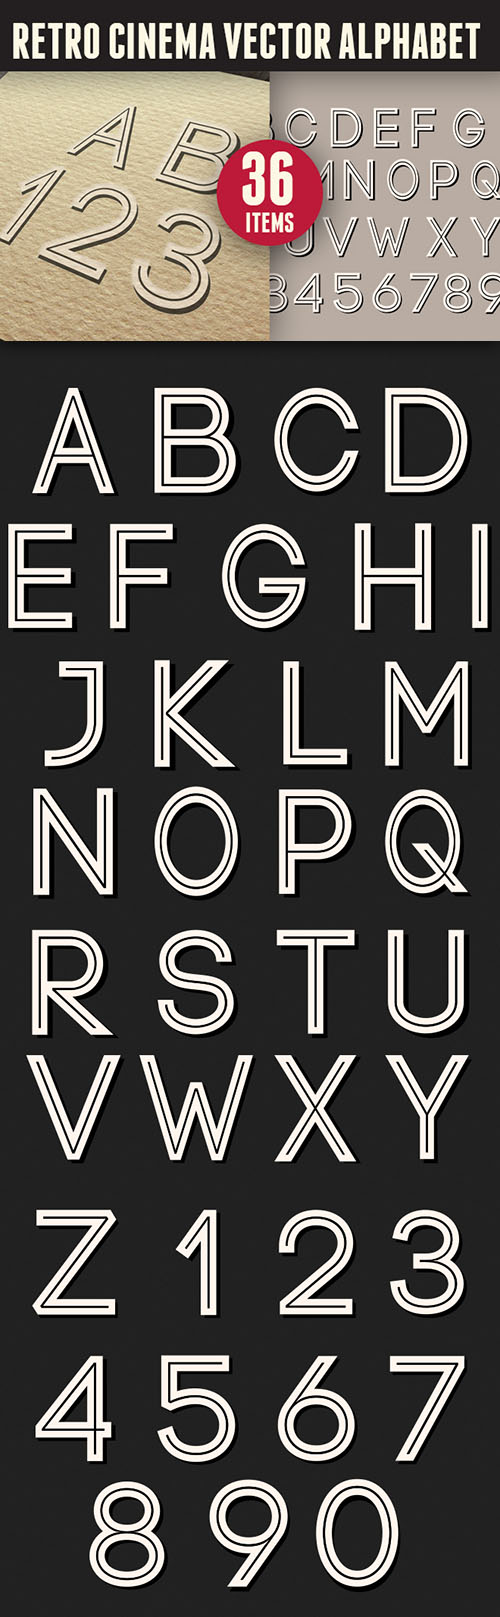 Retro Cinema Vector Alphabet Illustration